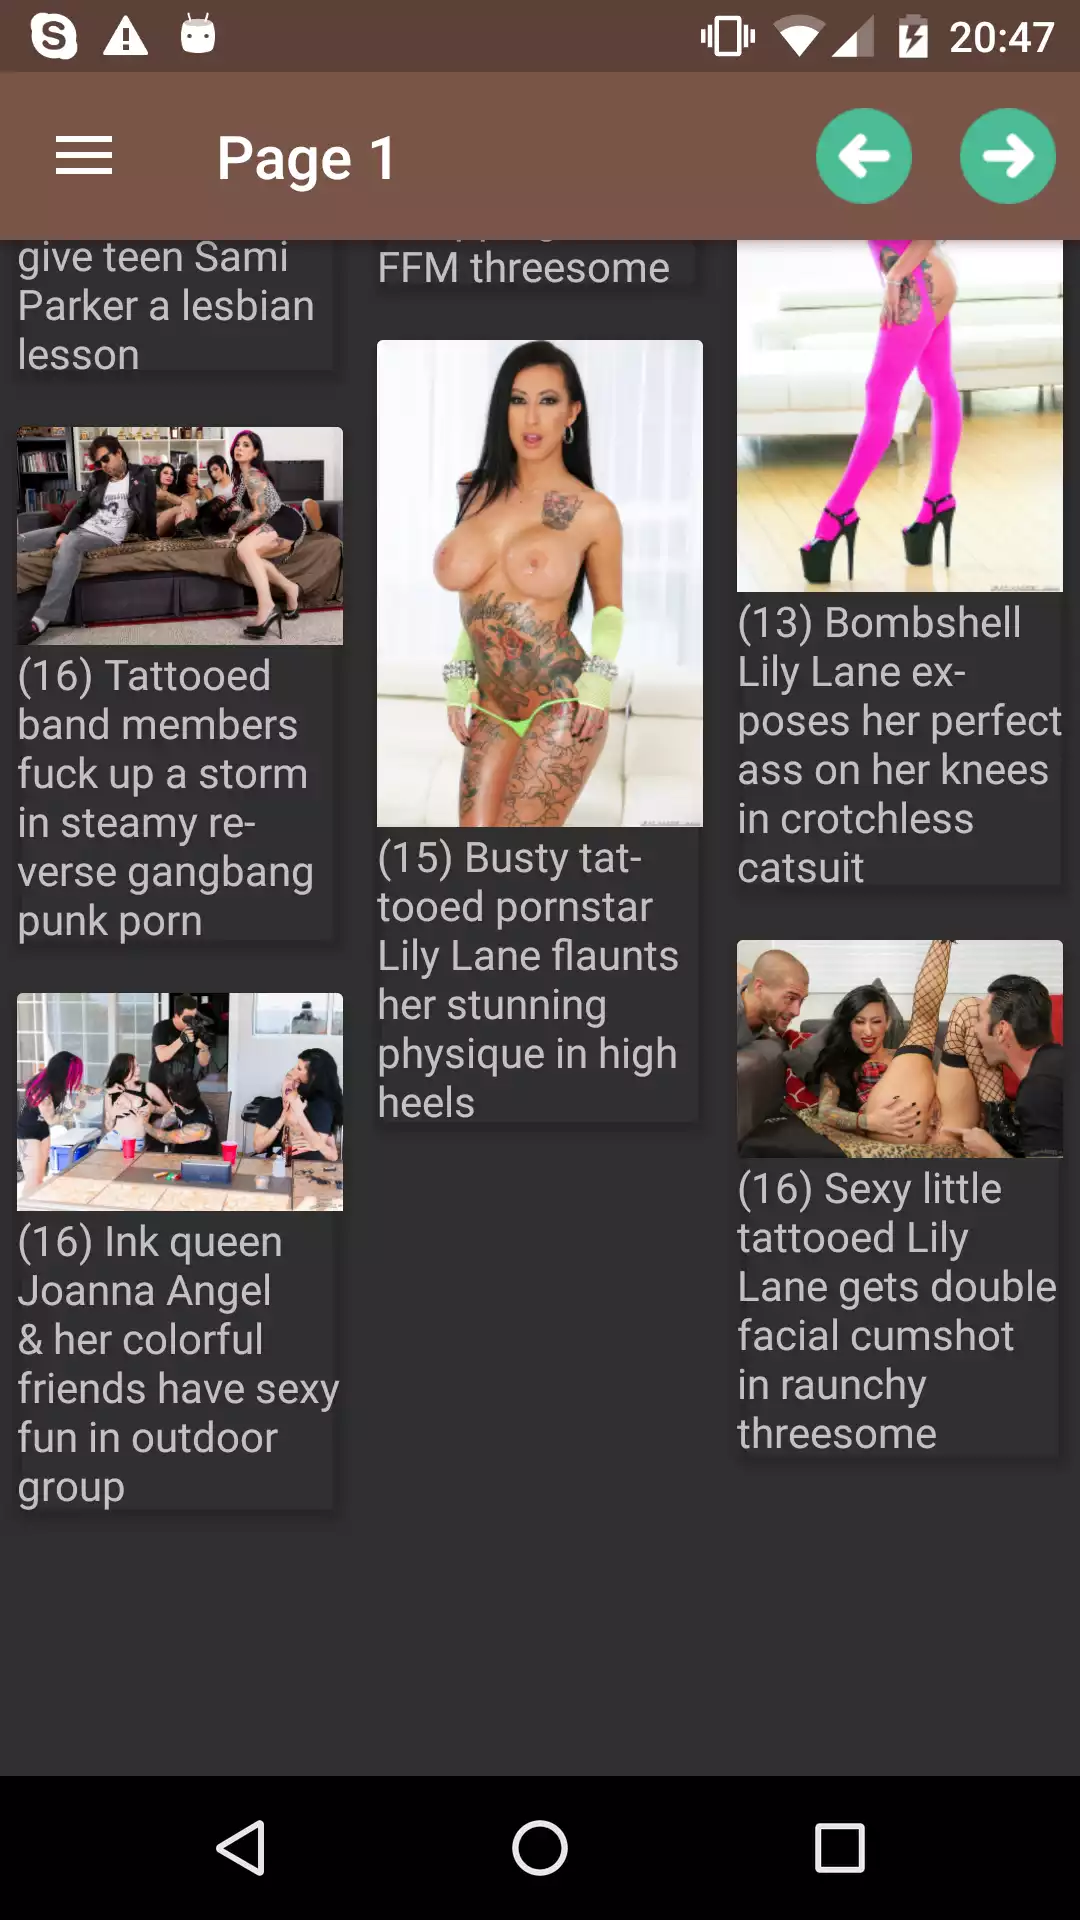 Lily Lane Pics wallpapers,porn,apk,galleries,hot,comics,comixharem,photos,sexy,free,pics,apps,pornstar,pornstars,hentai,hentei,adult,kristinf,app,tuesday,tits,titty,images